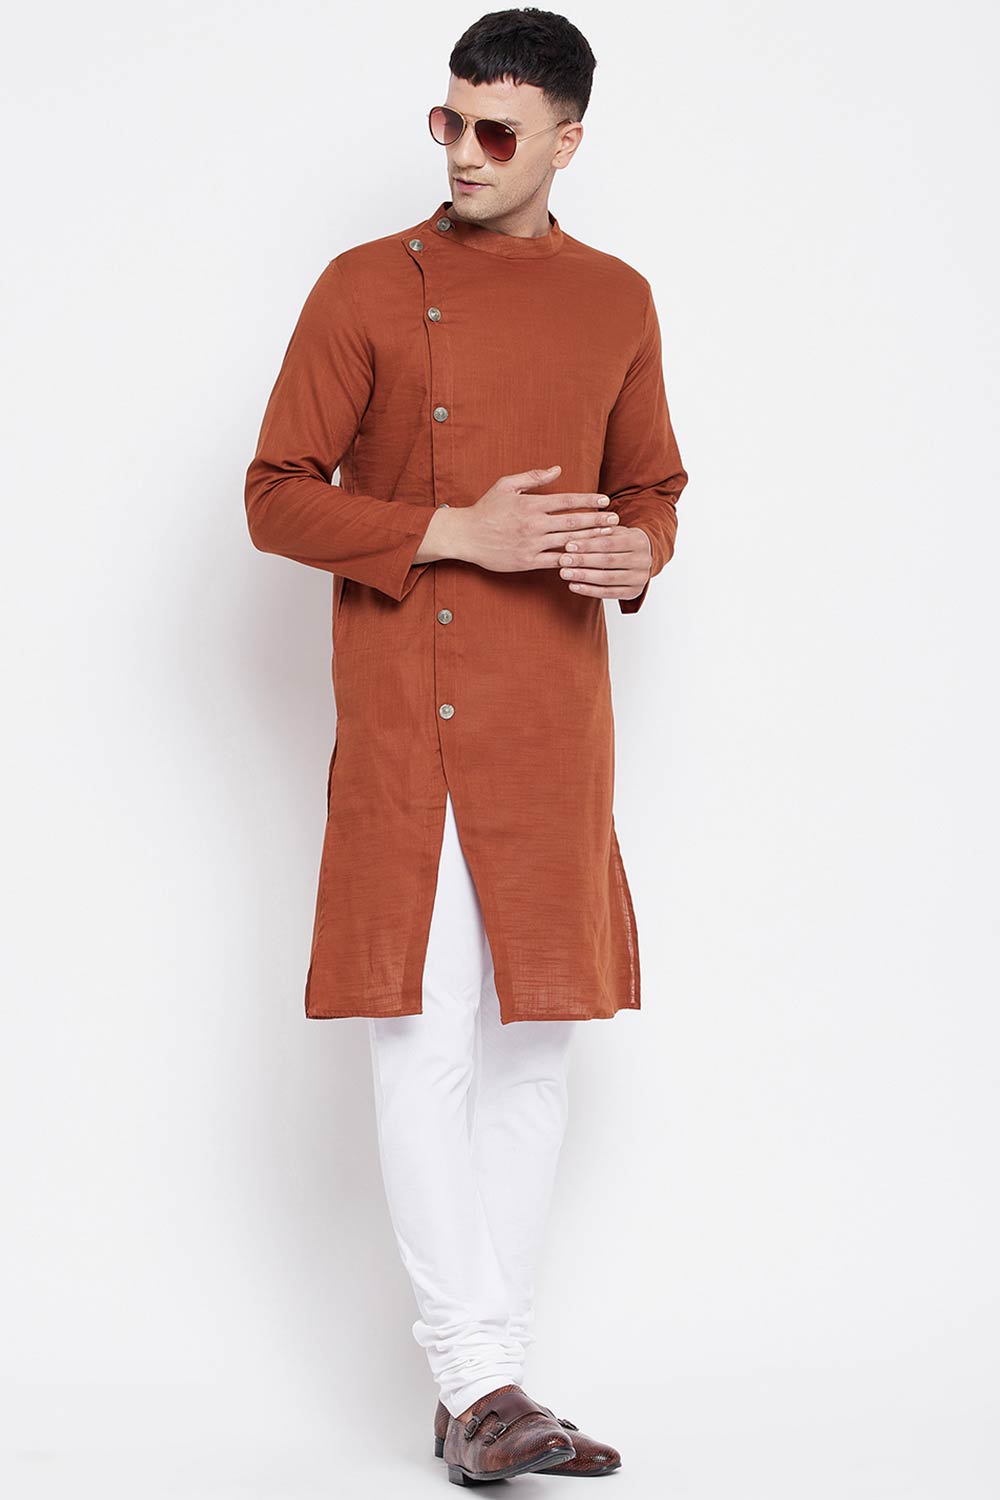 Men's Pure Cotton Solid Sherwani Top Kurta Top in Brown